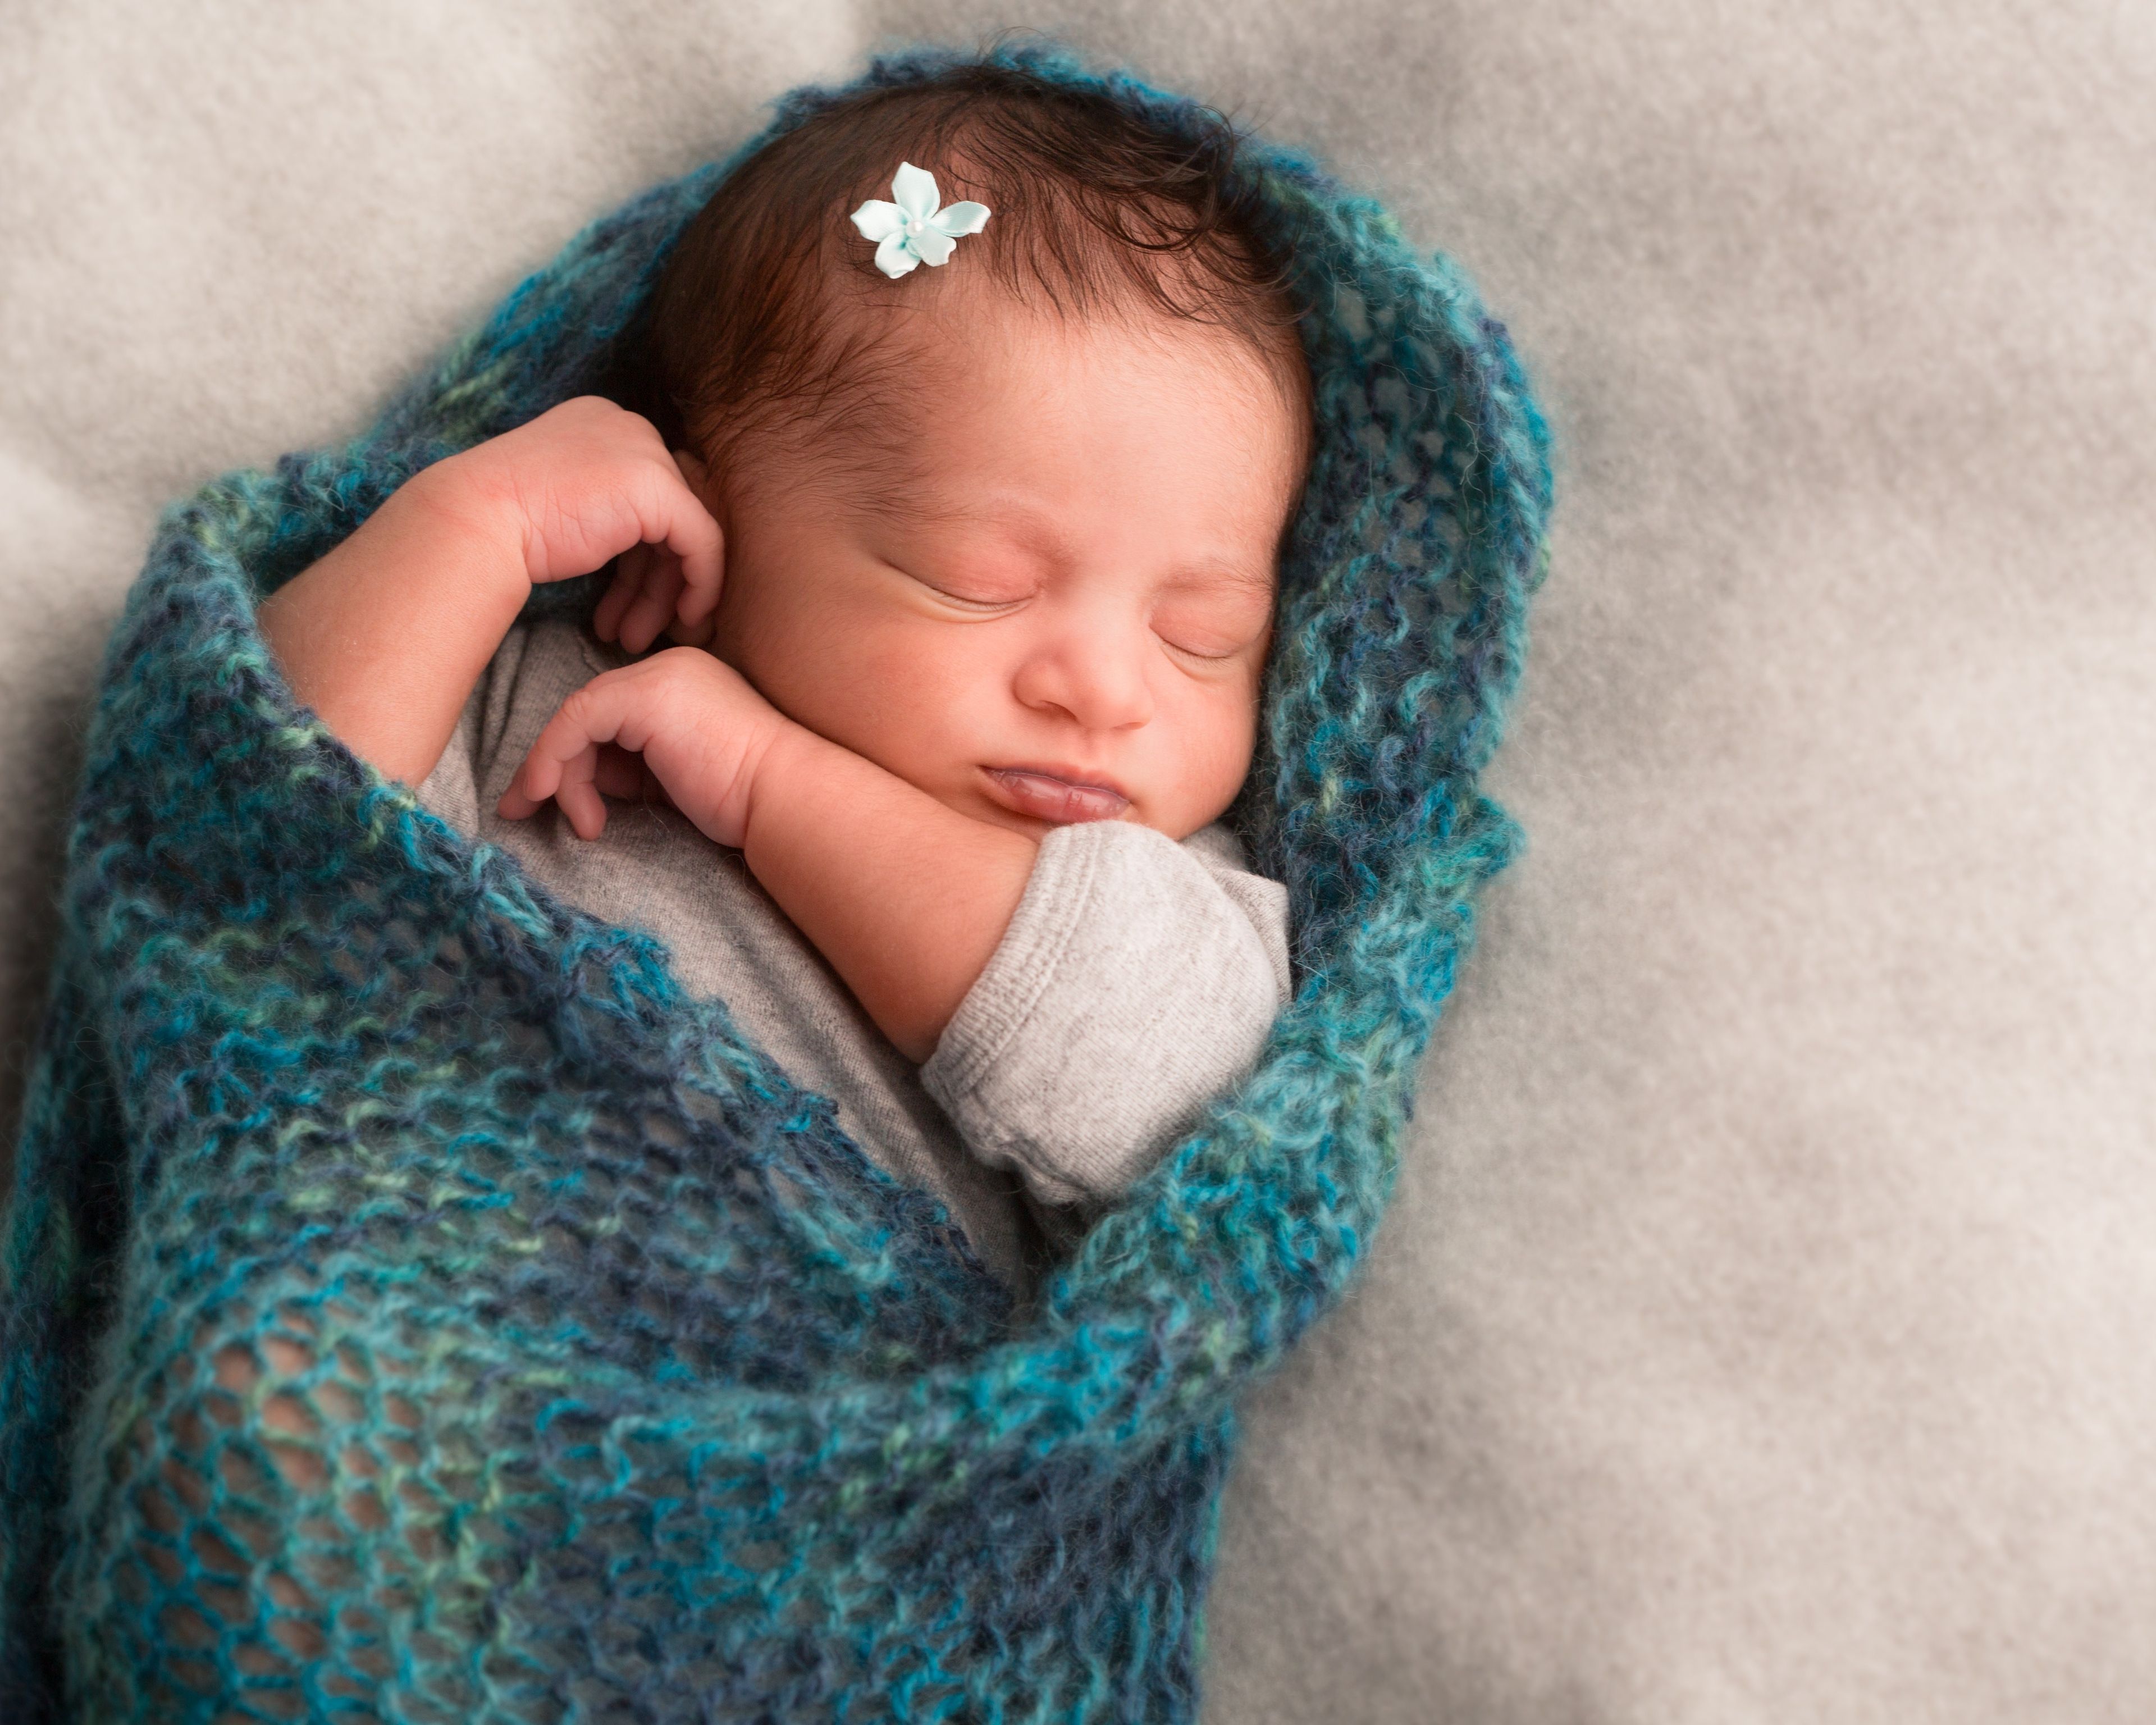 A newborn girl sleeping in a blanket.